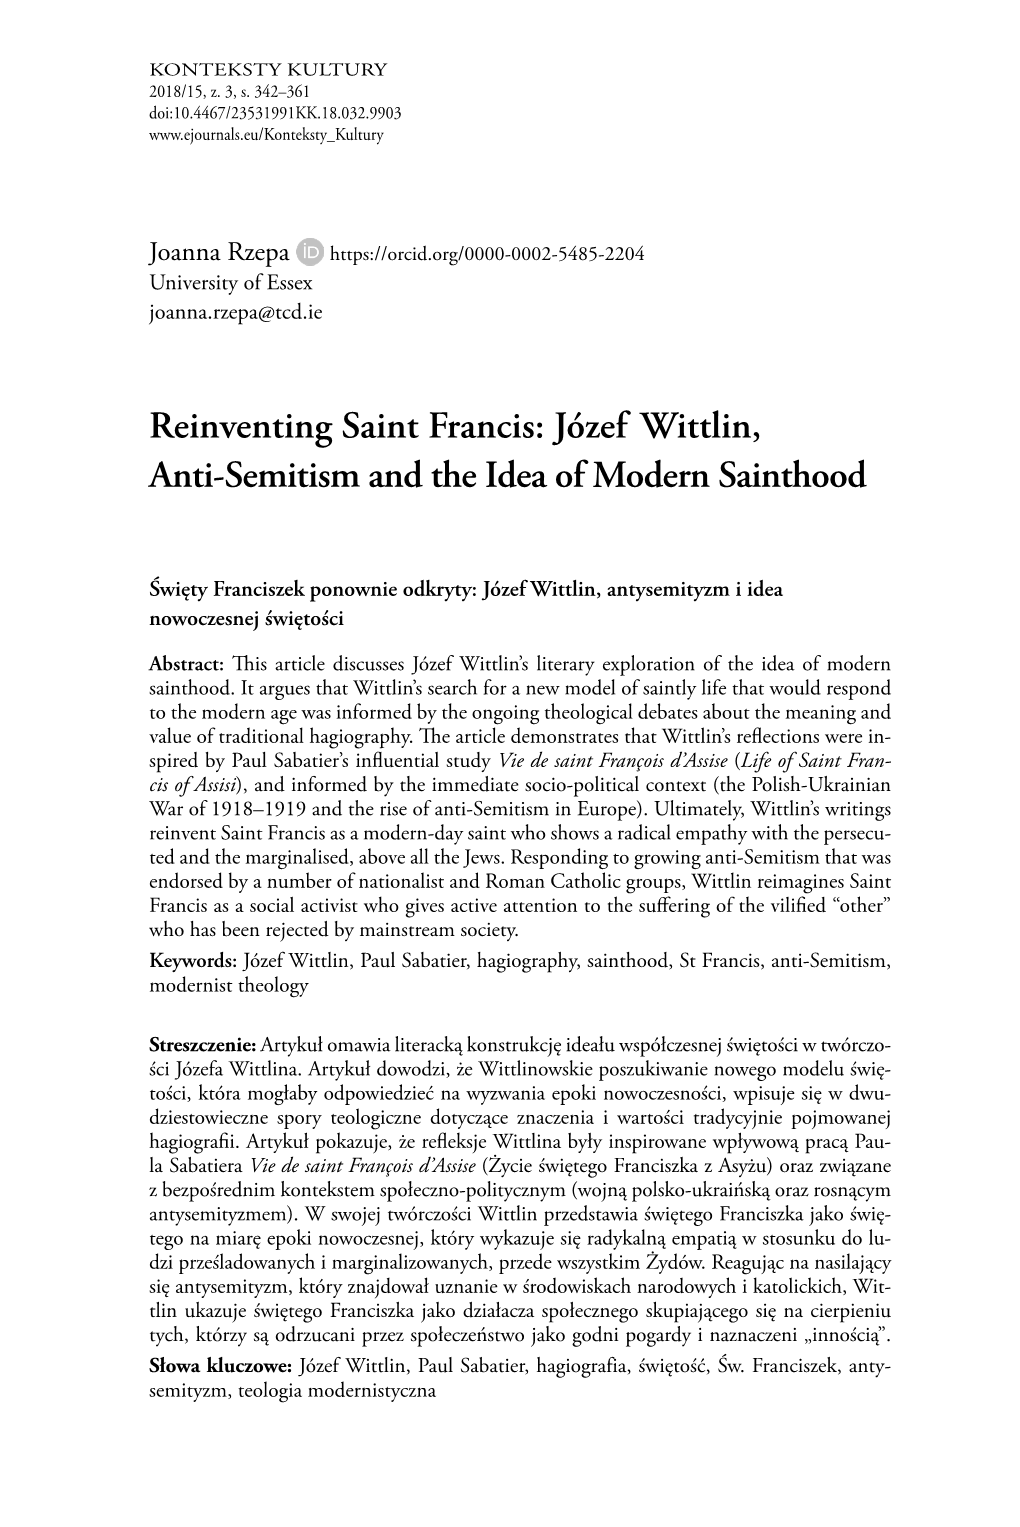 Reinventing Saint Francis: Józef Wittlin, Anti-Semitism and the Idea of Modern Sainthood